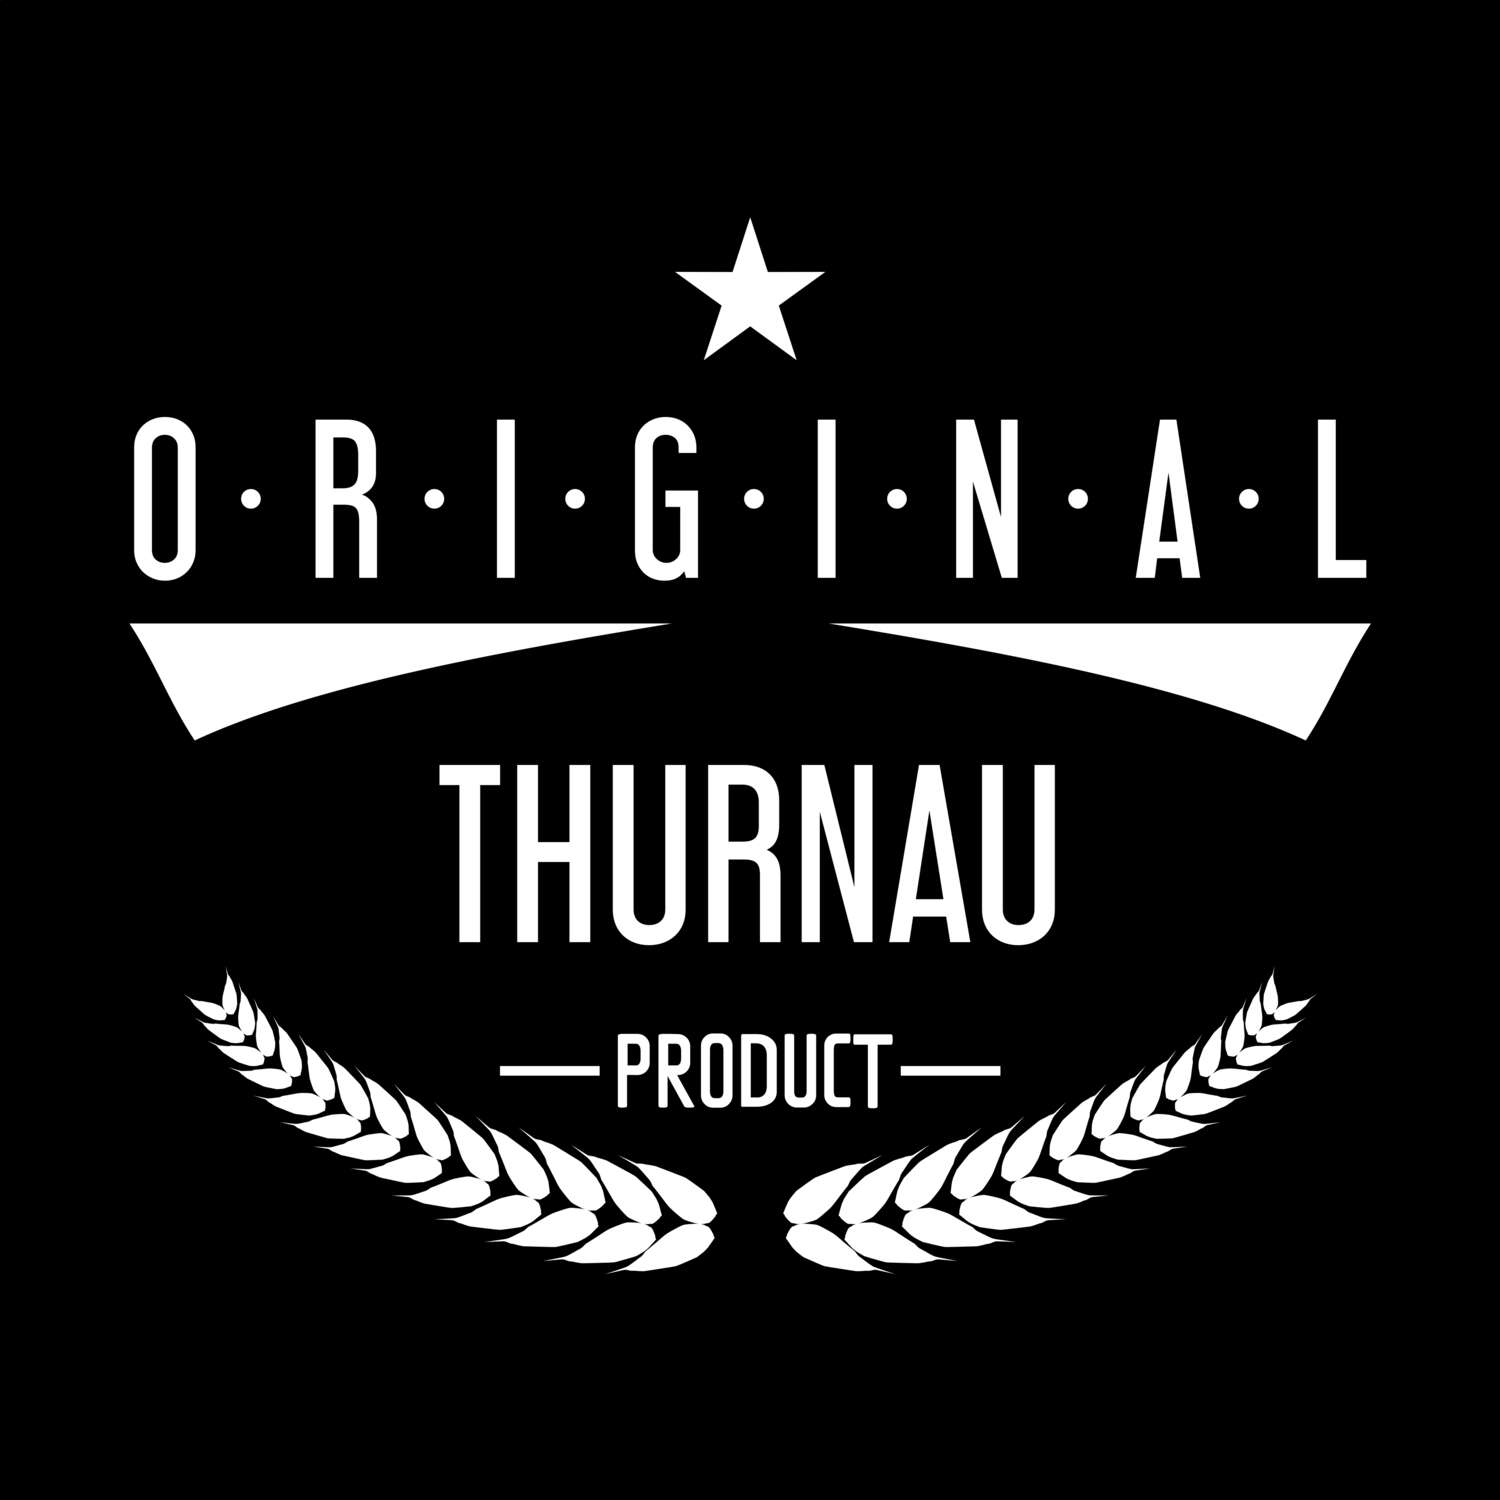 Thurnau T-Shirt »Original Product«